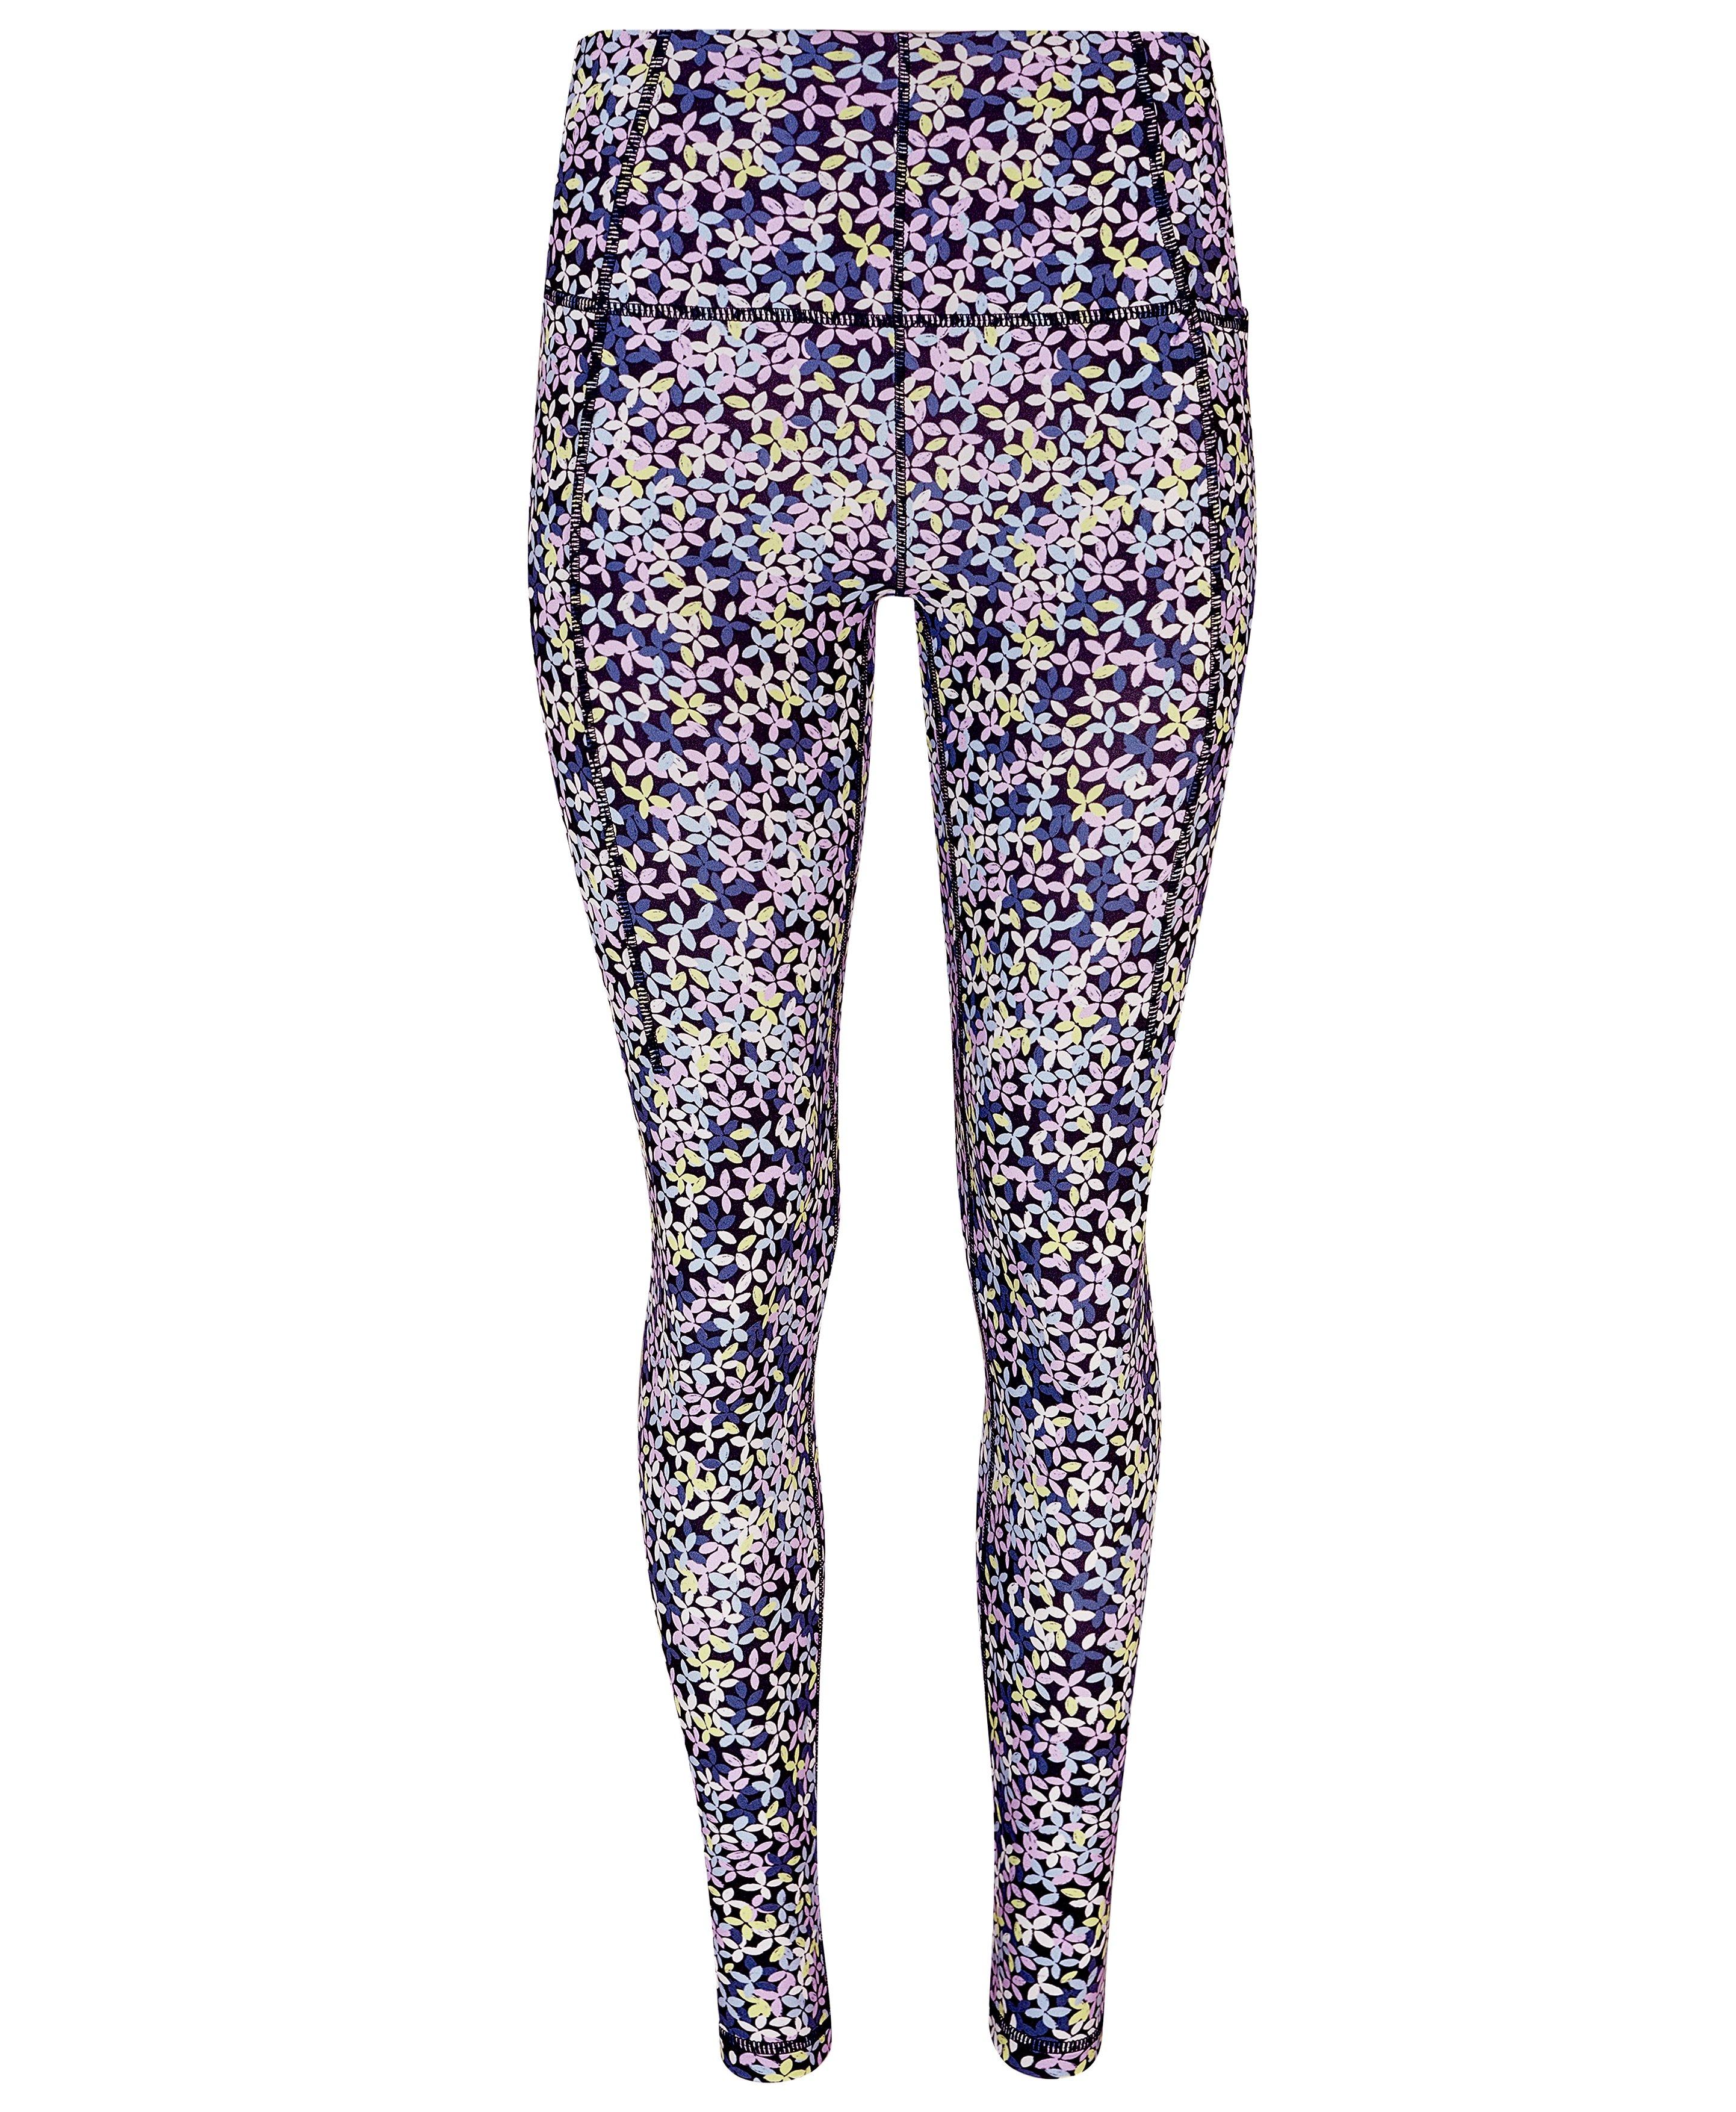 YWDJ Leggings for Women Women Pure Color Hip-lifting Sports Fitness Running  High-waist vest Yoga Suit Purple M 